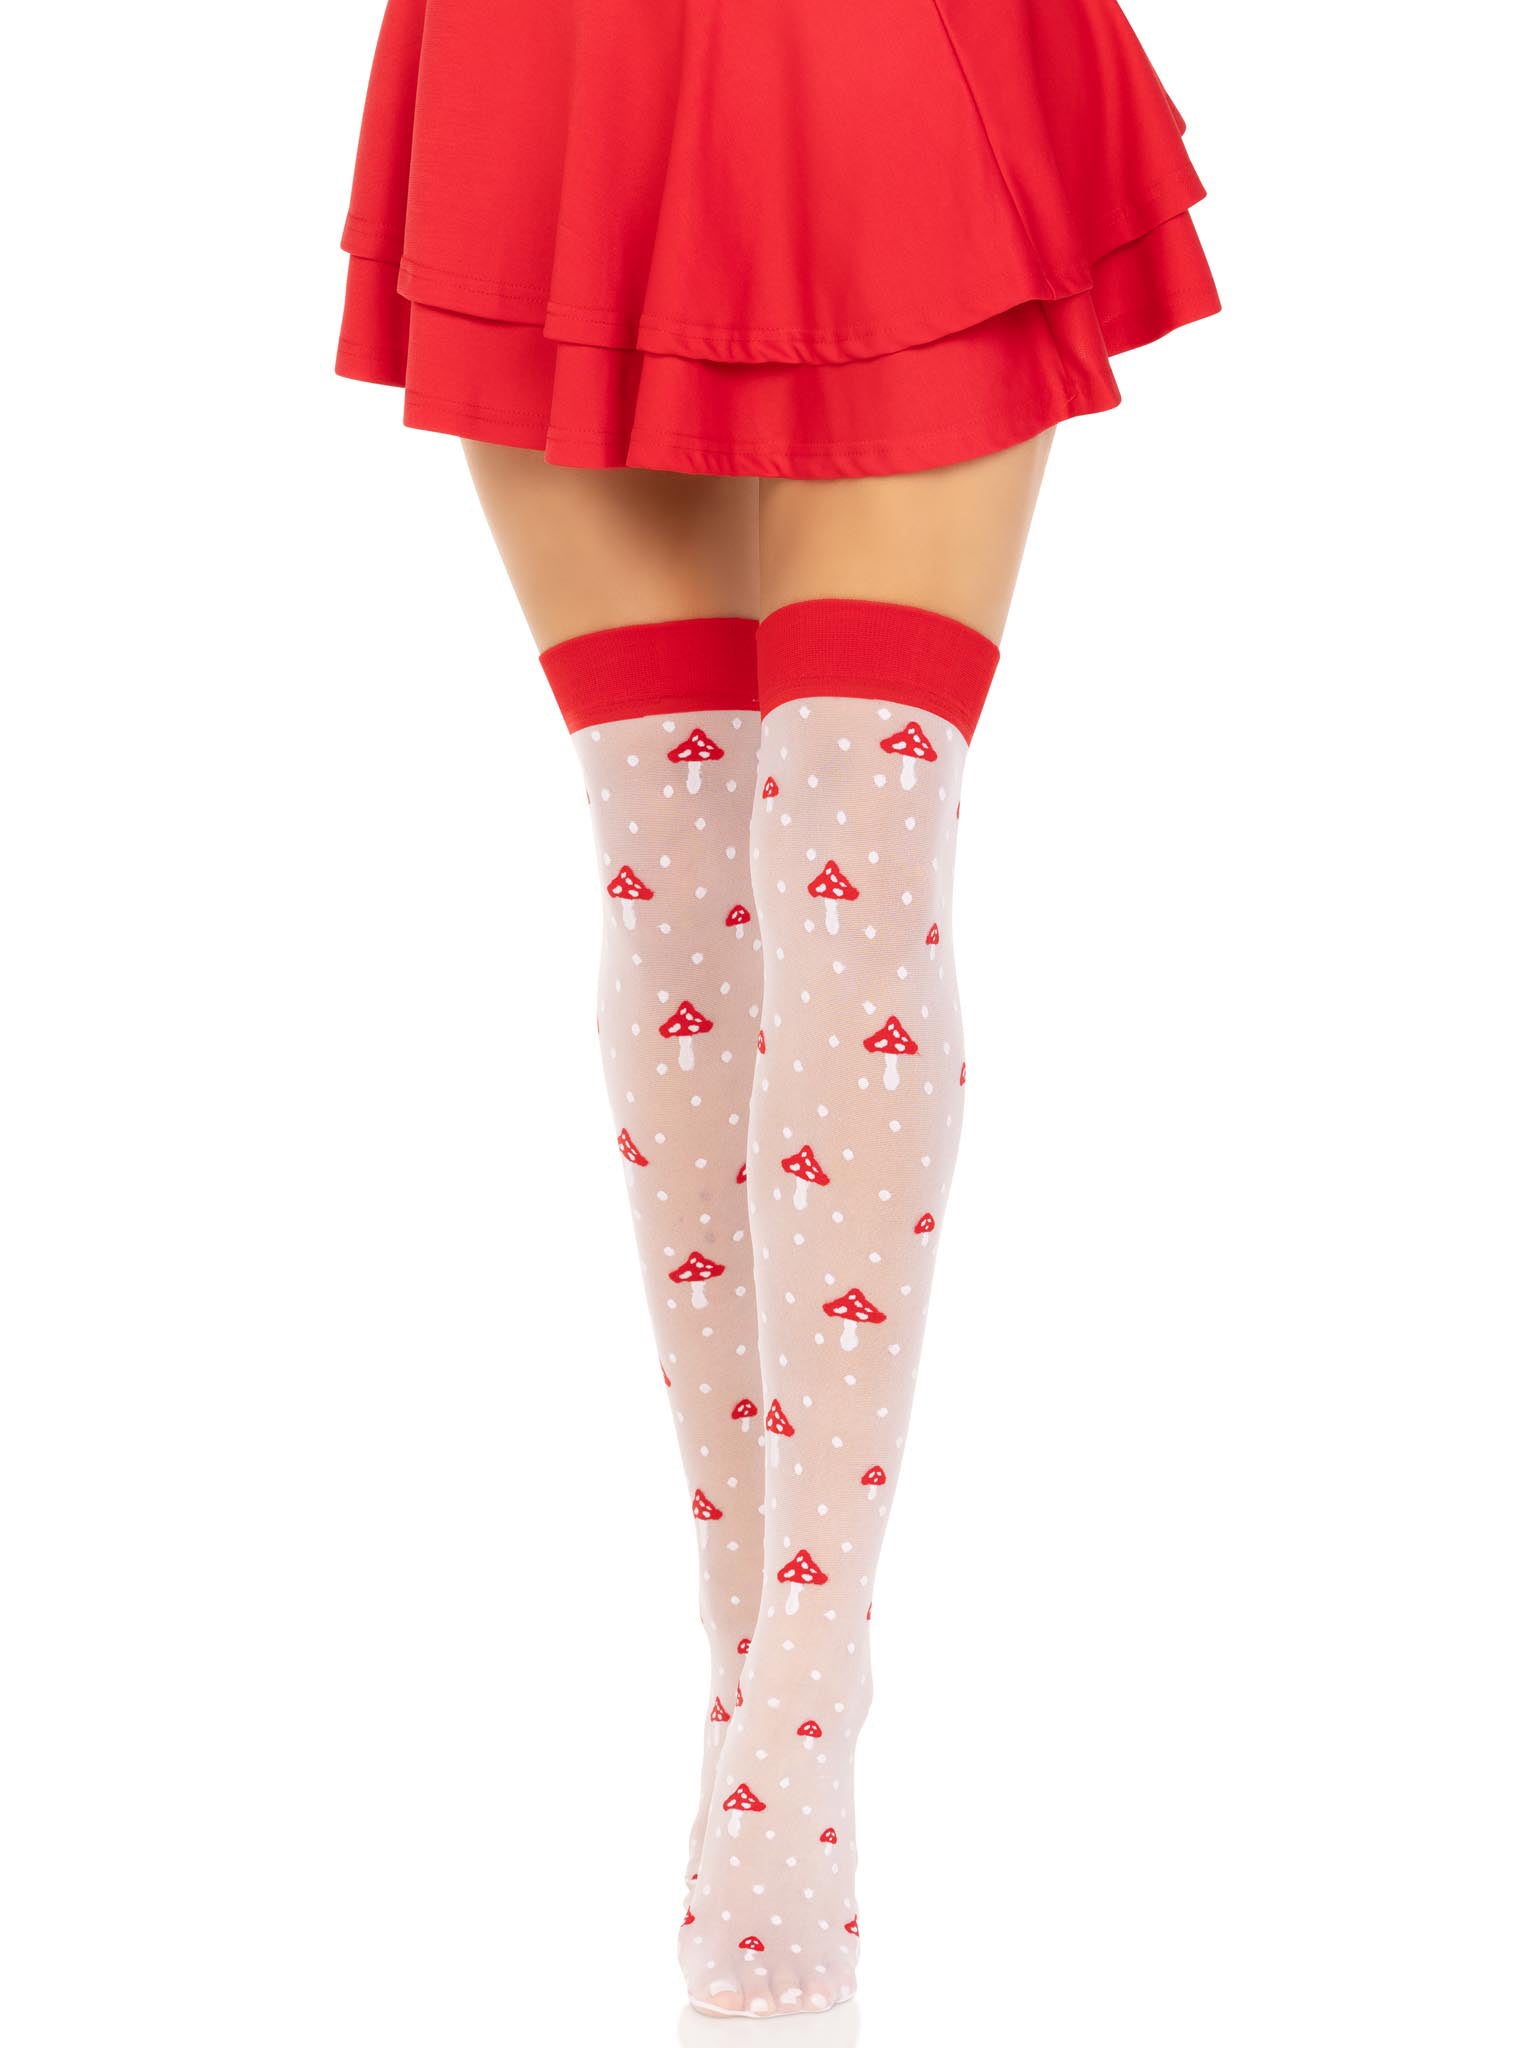 Polka Dot Mushroom Thigh High - One Size - White/red-4